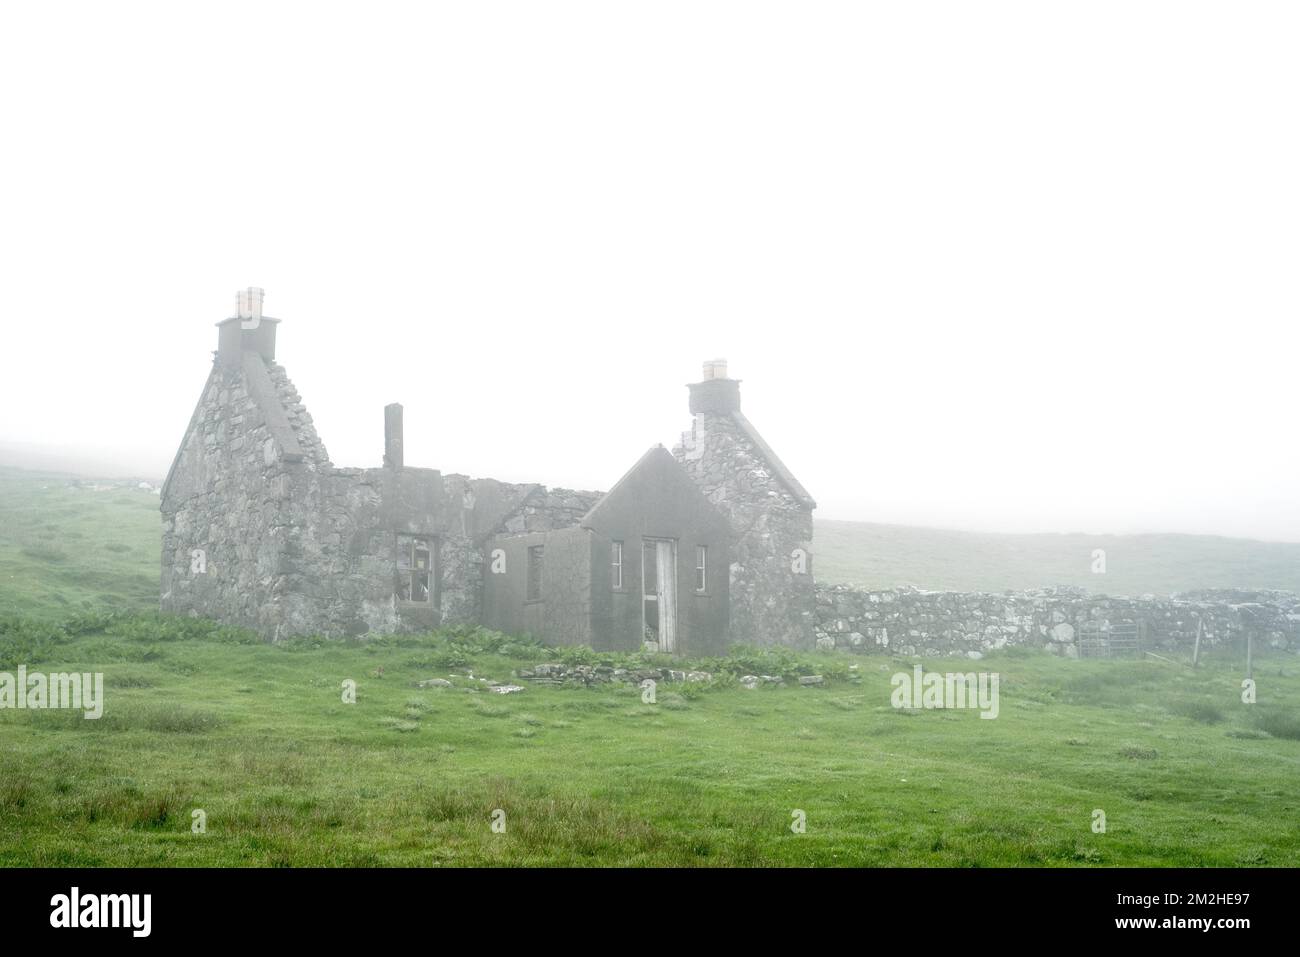 Abandoned crofter's house in thick mist, Shetland Islands, Scotland, UK | Croft, habitation du crofter abandonnée dans la brume, Shetland, Ecosse 05/07/2018 Stock Photo